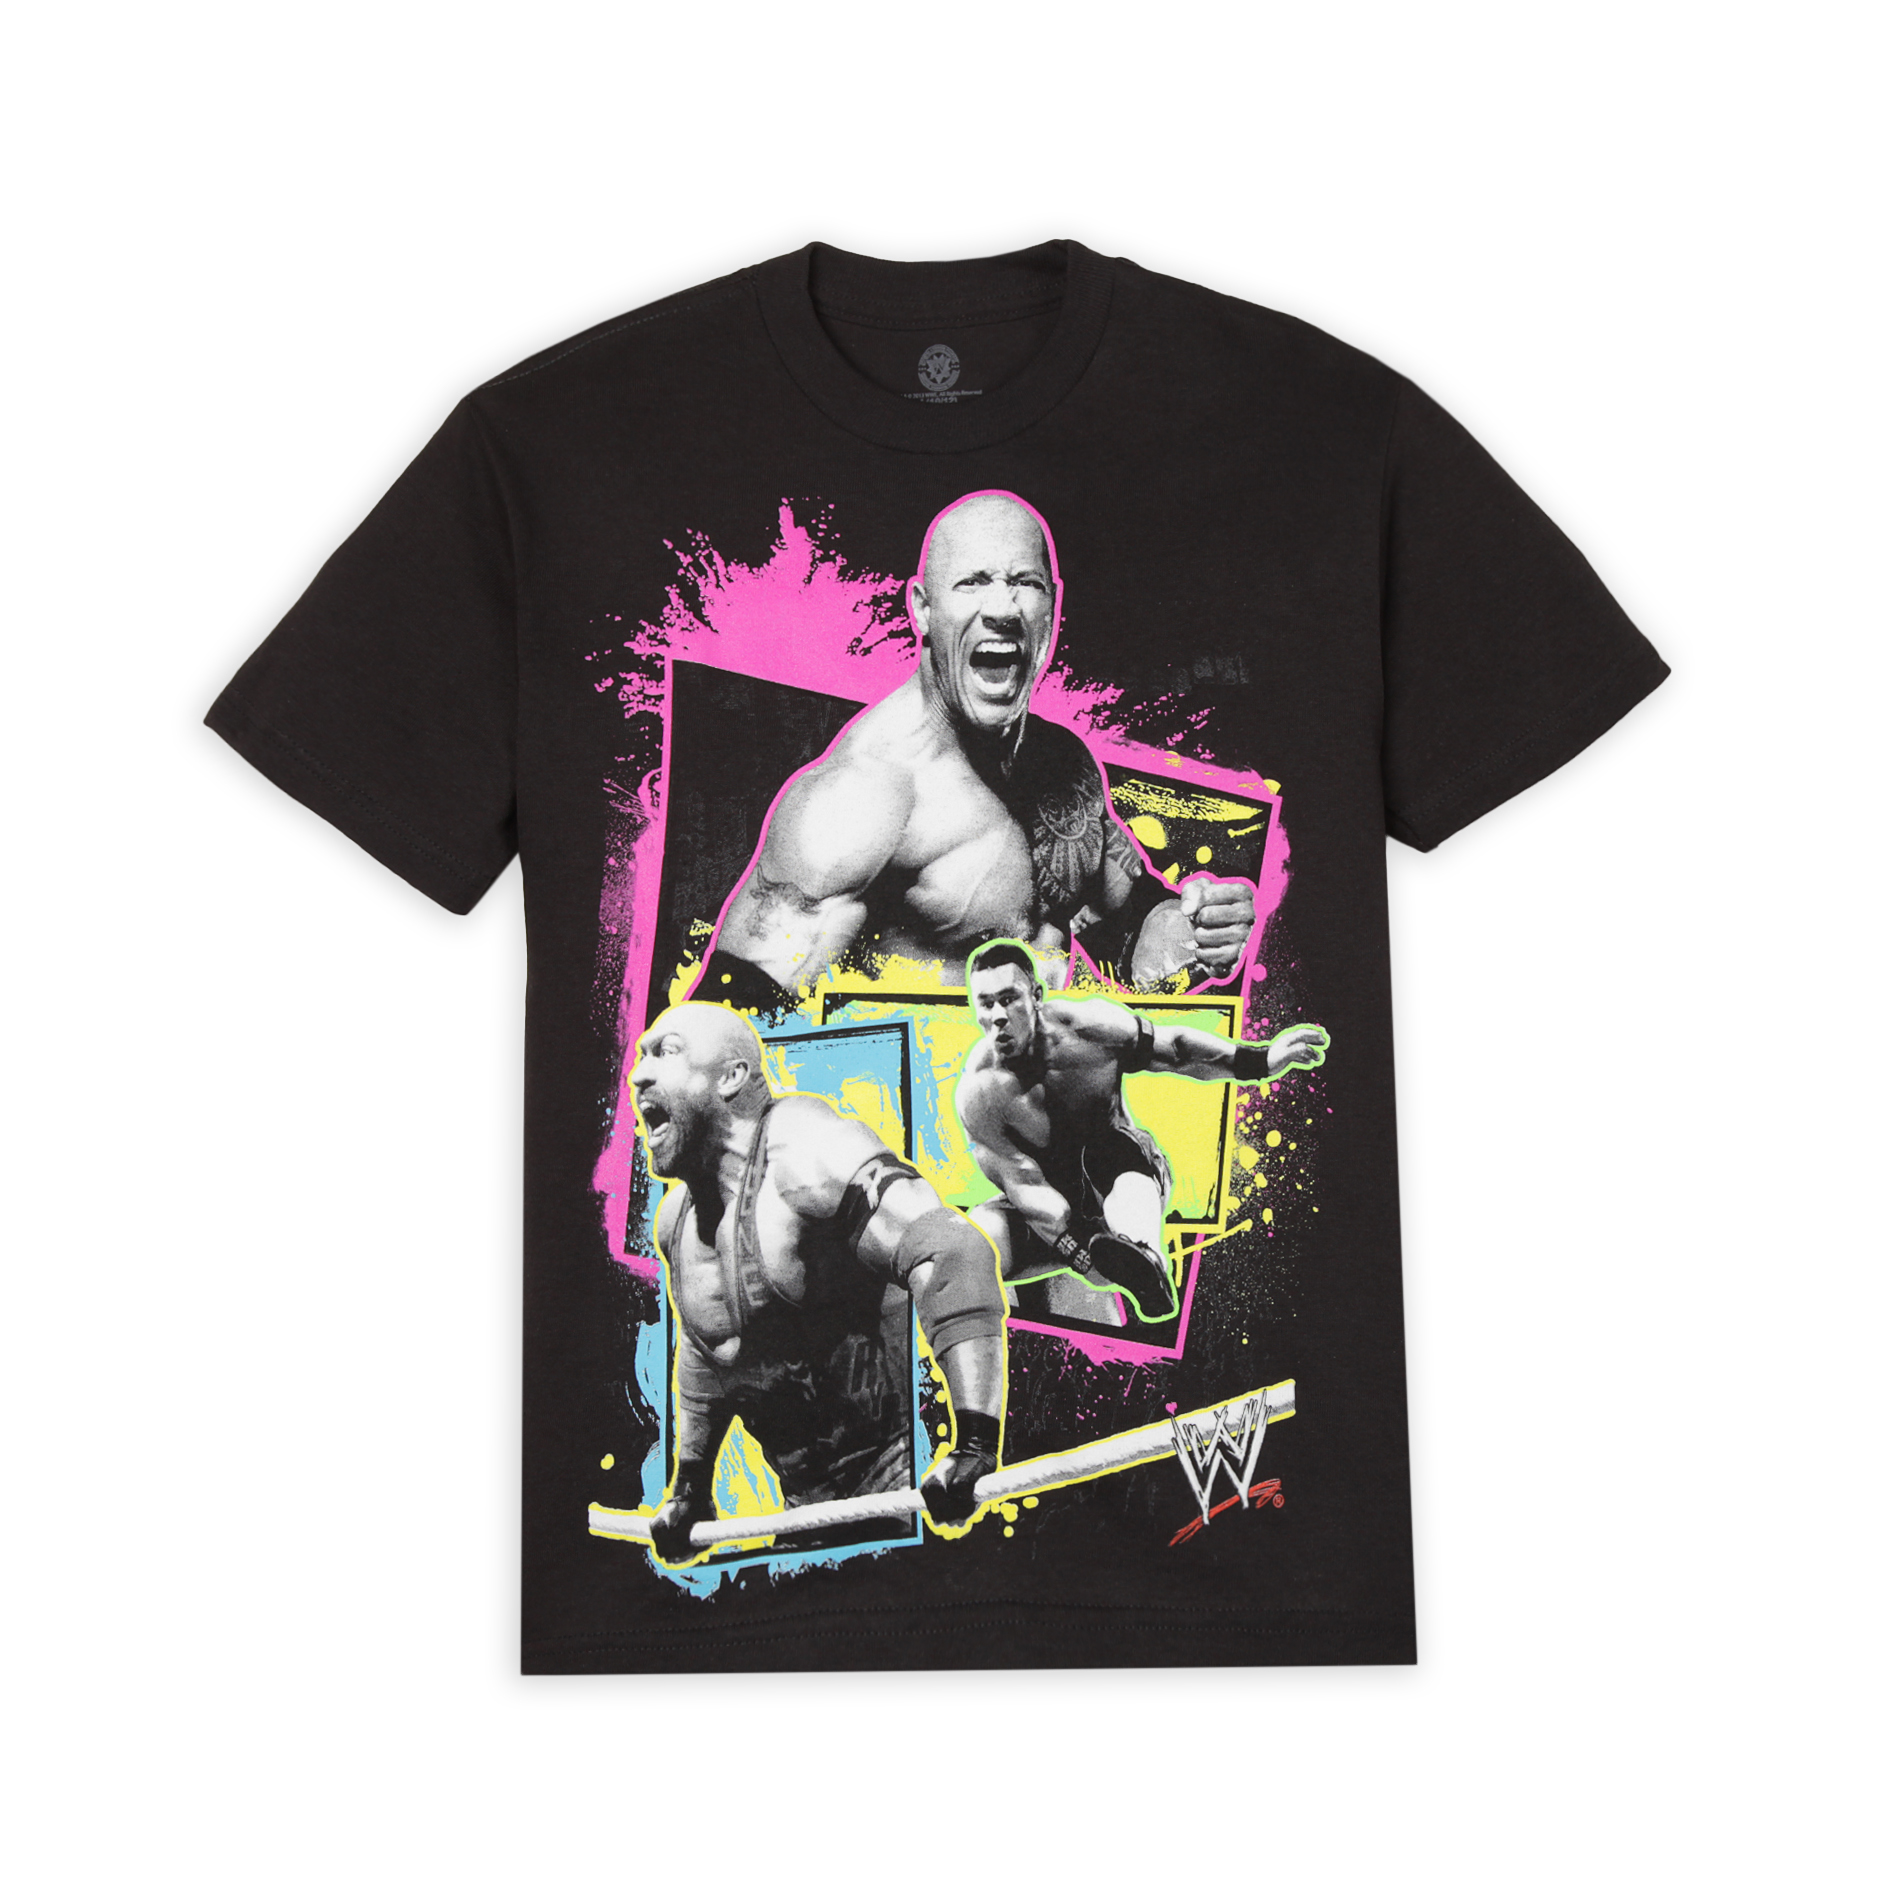 WWE Boy's Graphic T-Shirt - The Rock  John Cena & Ryback